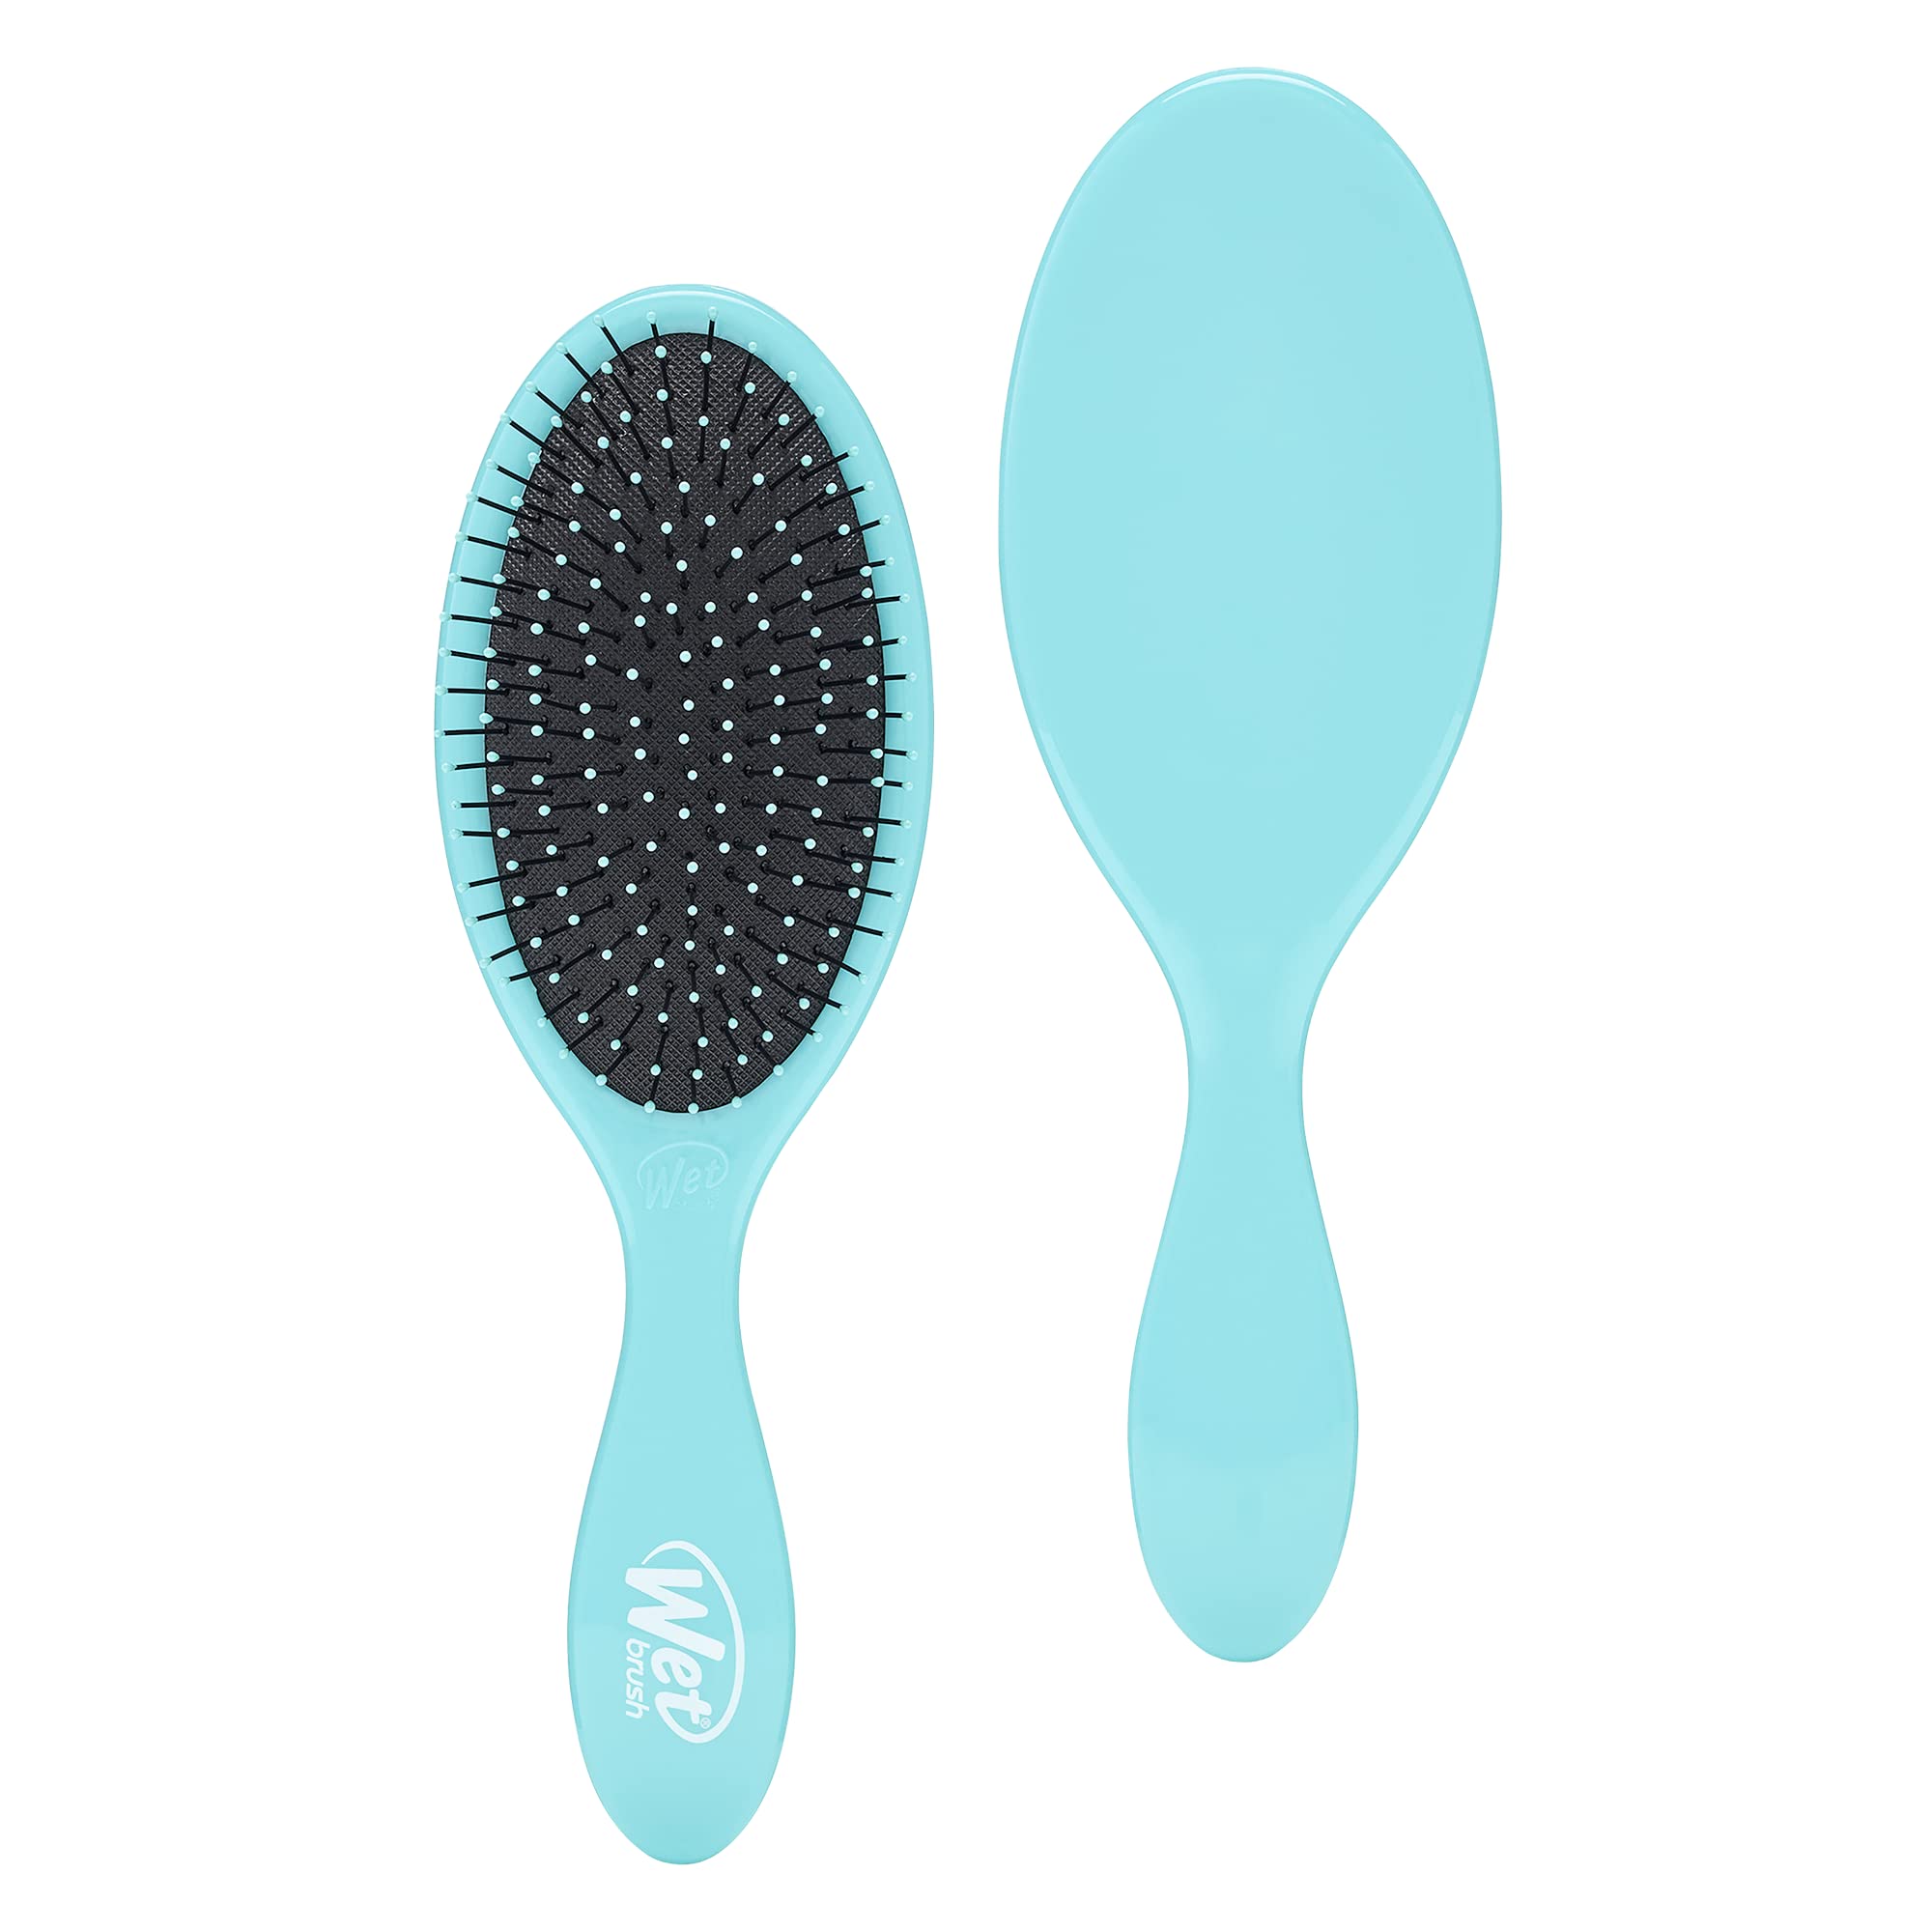 Wet Brush Original Detangler Hair Brush, Amazon Exclusive Aqua - Ultra-Soft IntelliFlex Bristles - Detangling Hairbrush Glides Through Tangles For All Hair Types (Wet Dry & Damaged Hair) - Women & Men